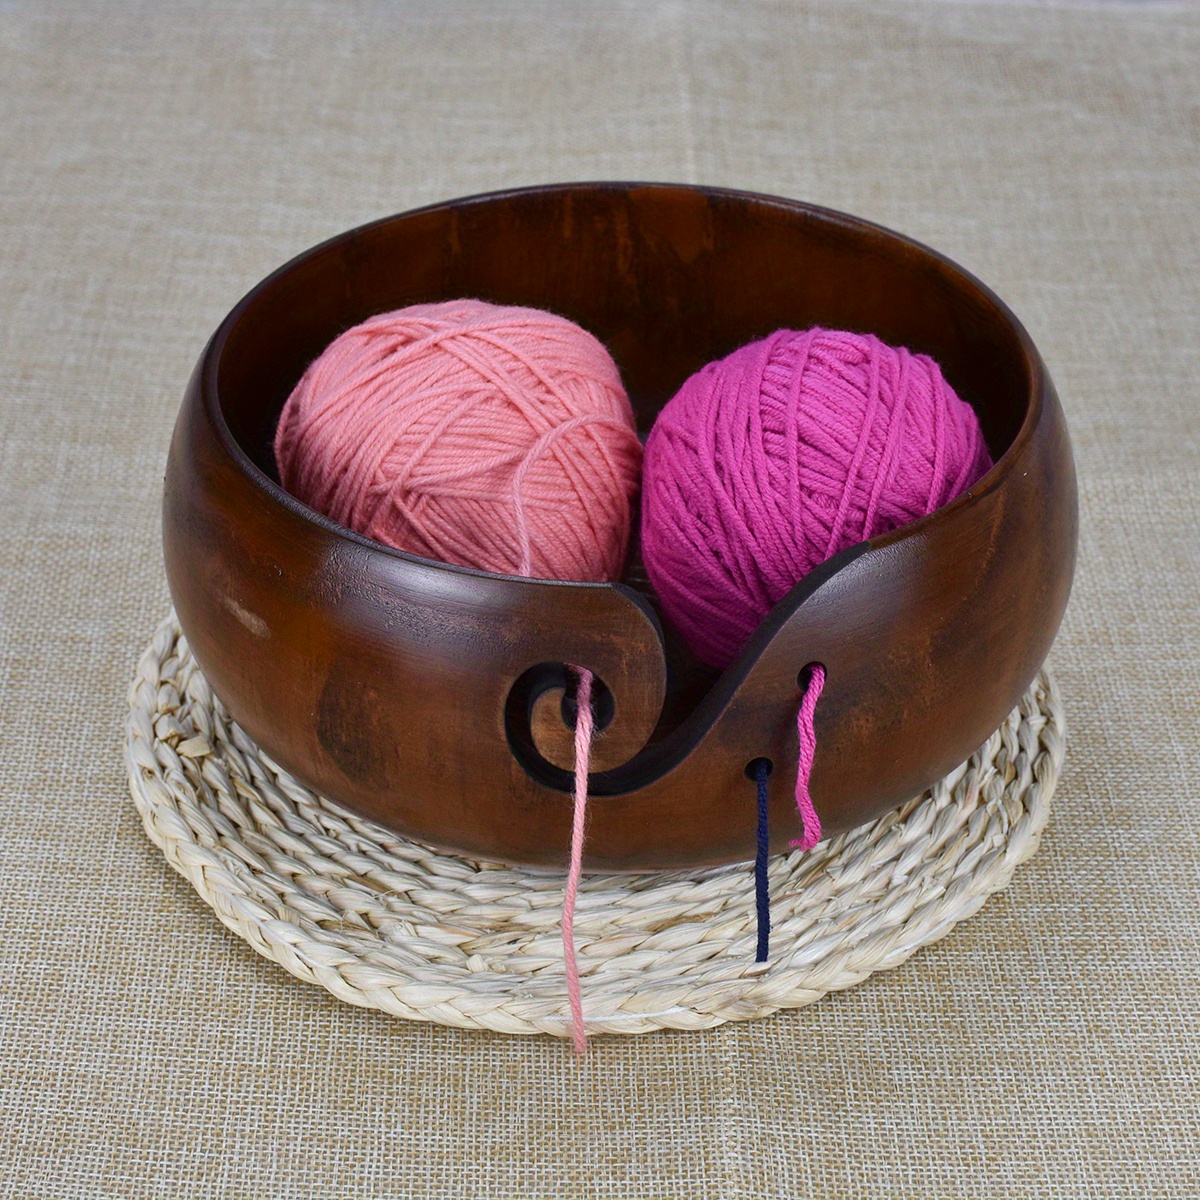 Joyeee Handmade Yarn Bowl, 6'' Crafted Wooden Yarn Storage Bowl